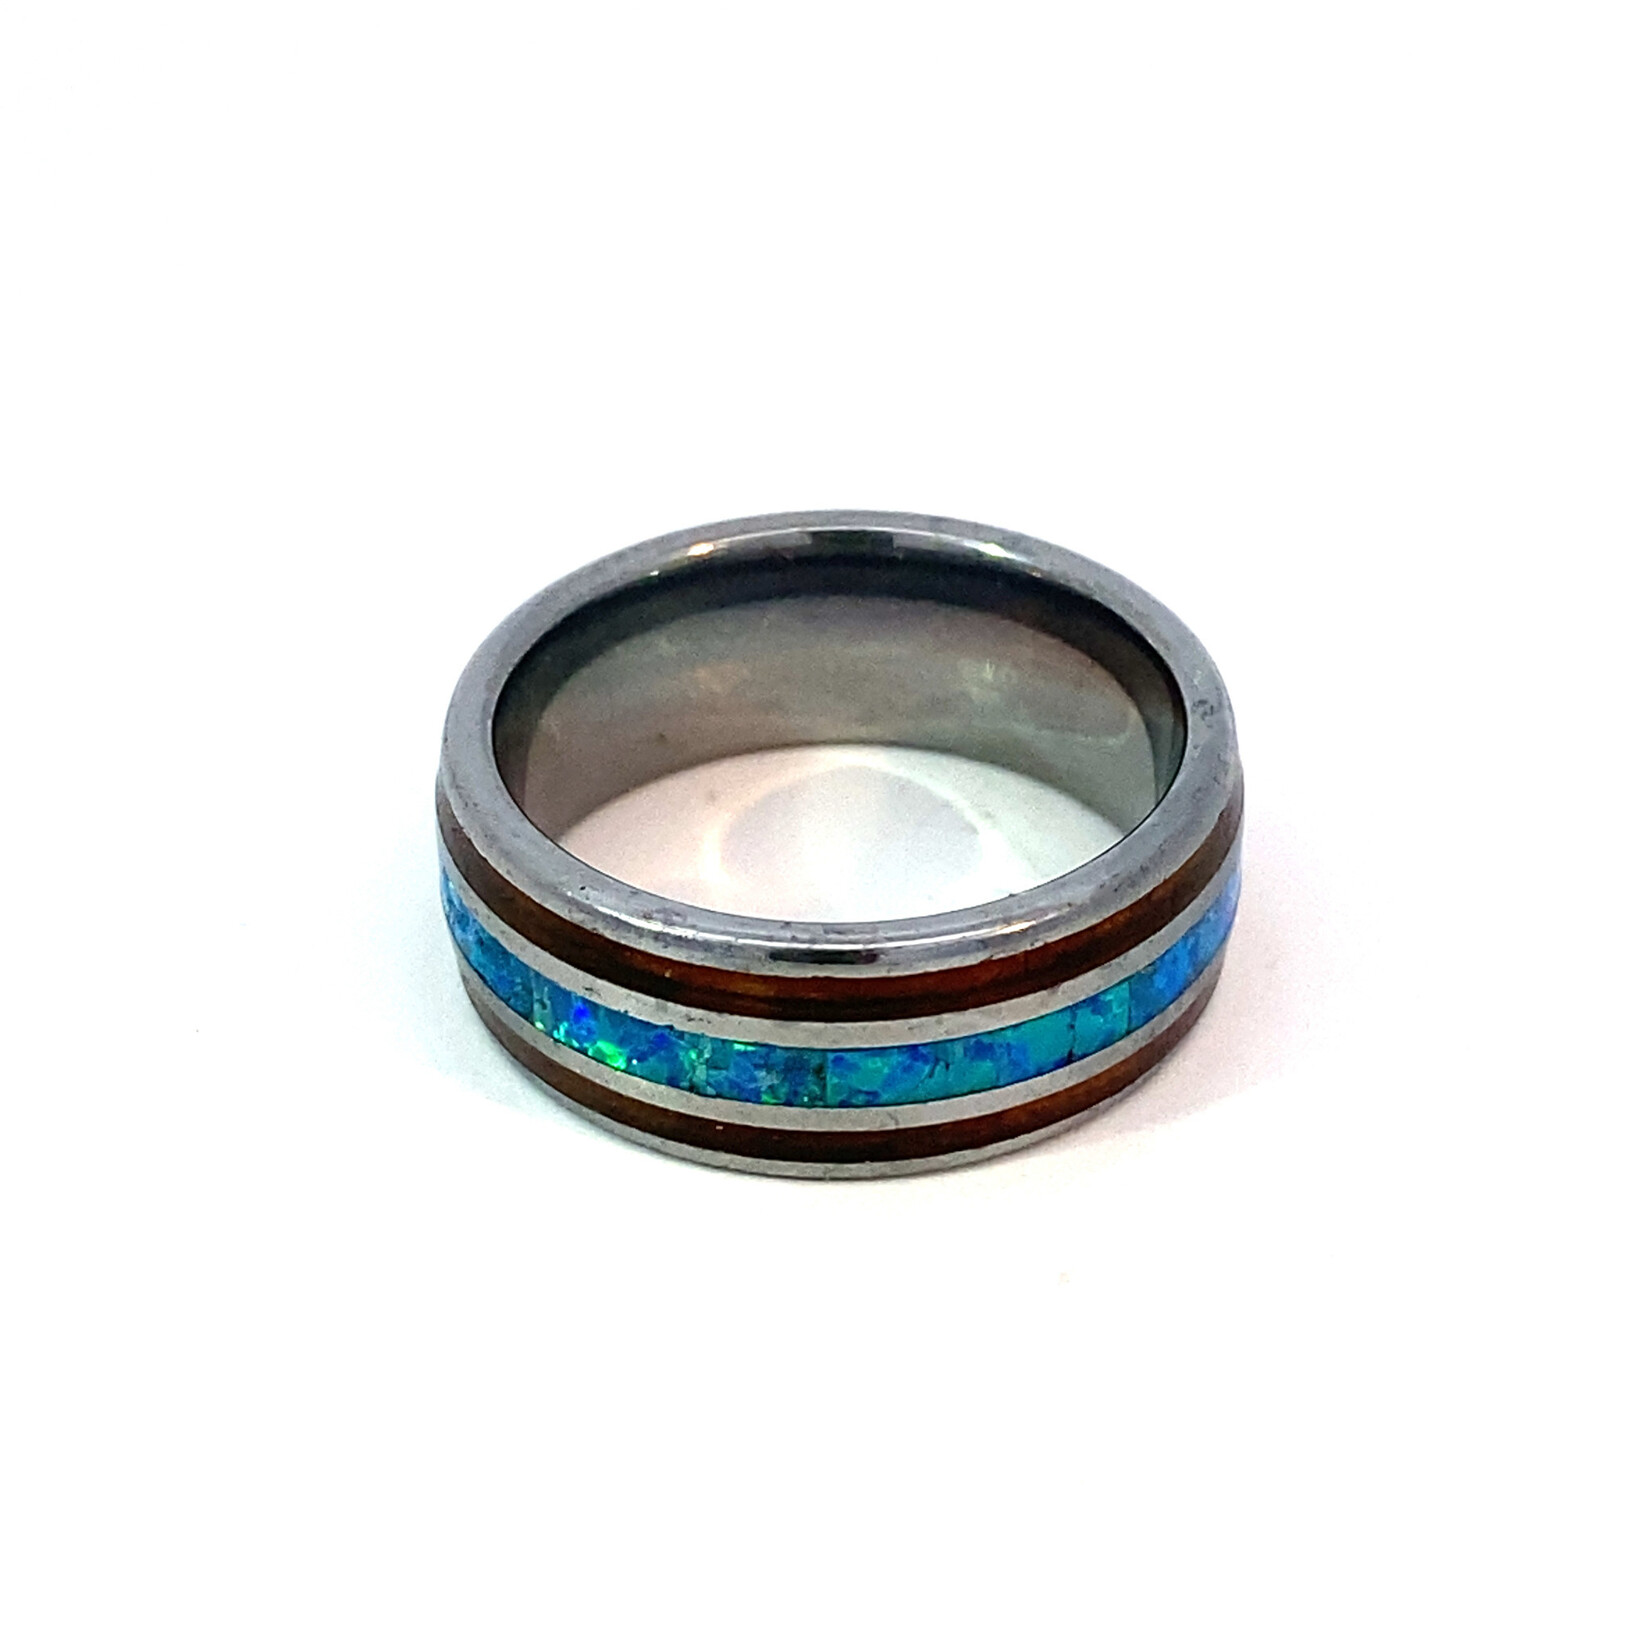 8mm Tungsten w/ Opal Wood Inlay size 8